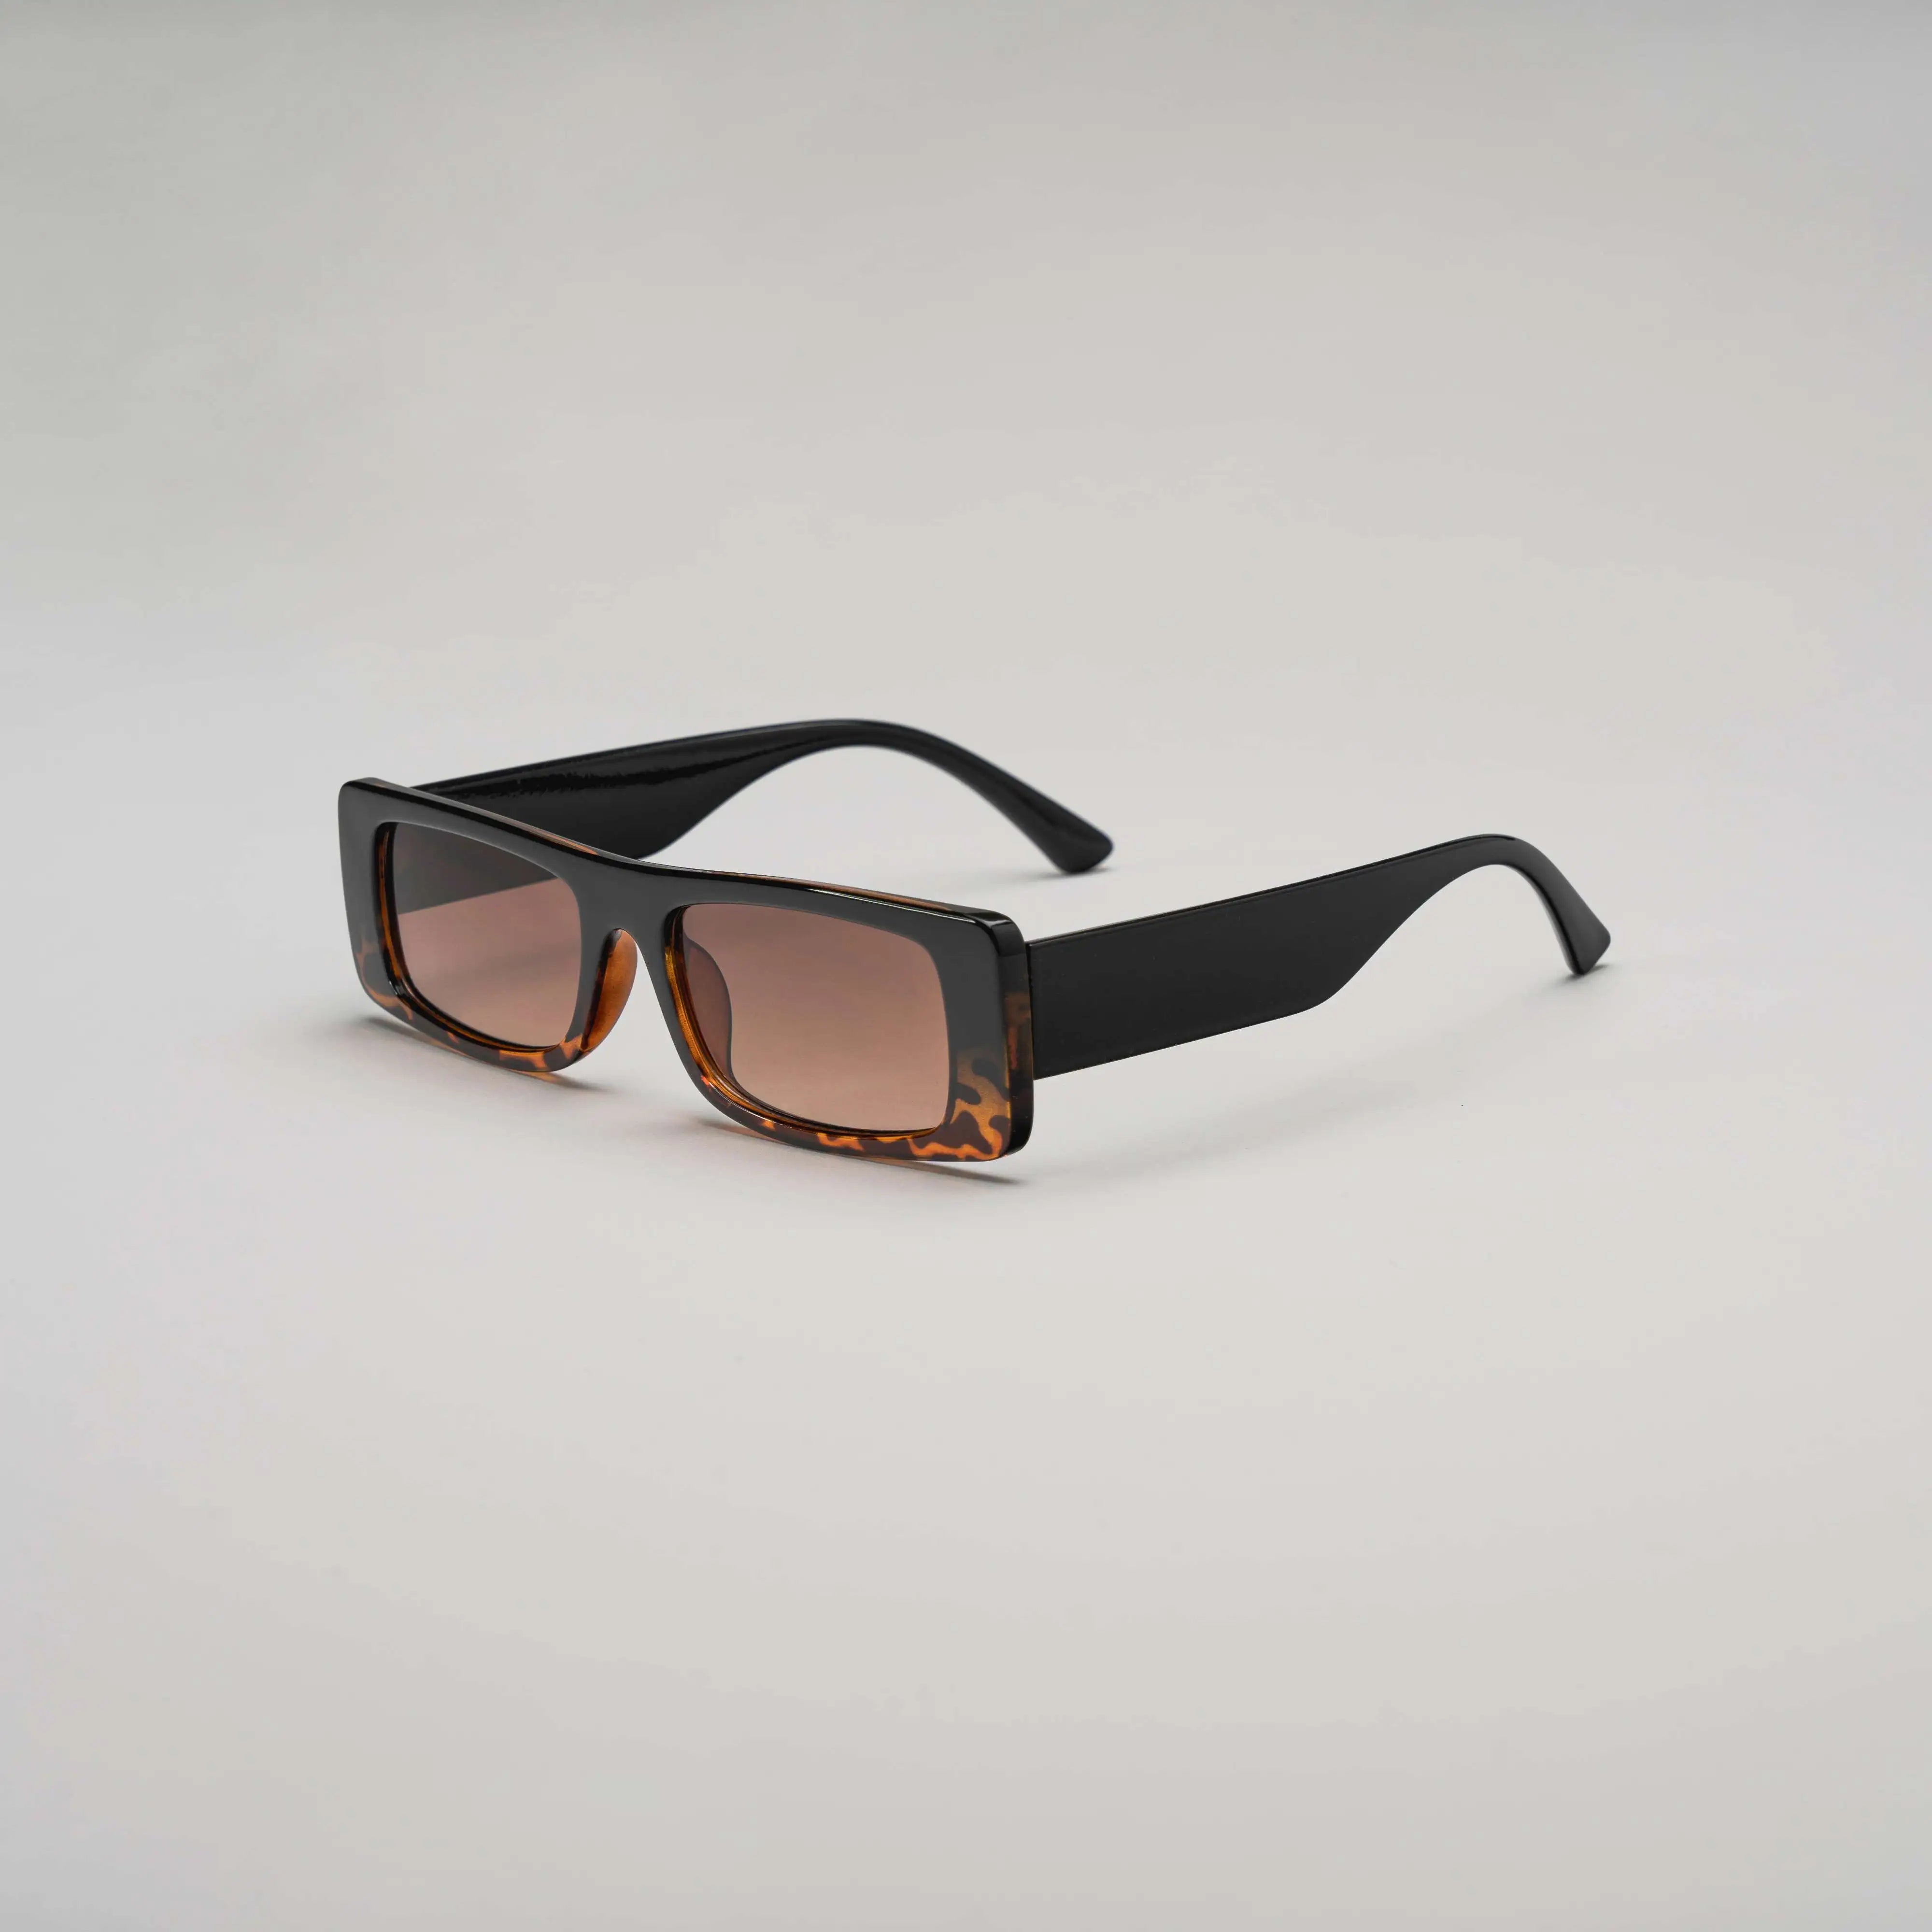 'Pay N' Spray' Retro Sunglasses in Black & Brown